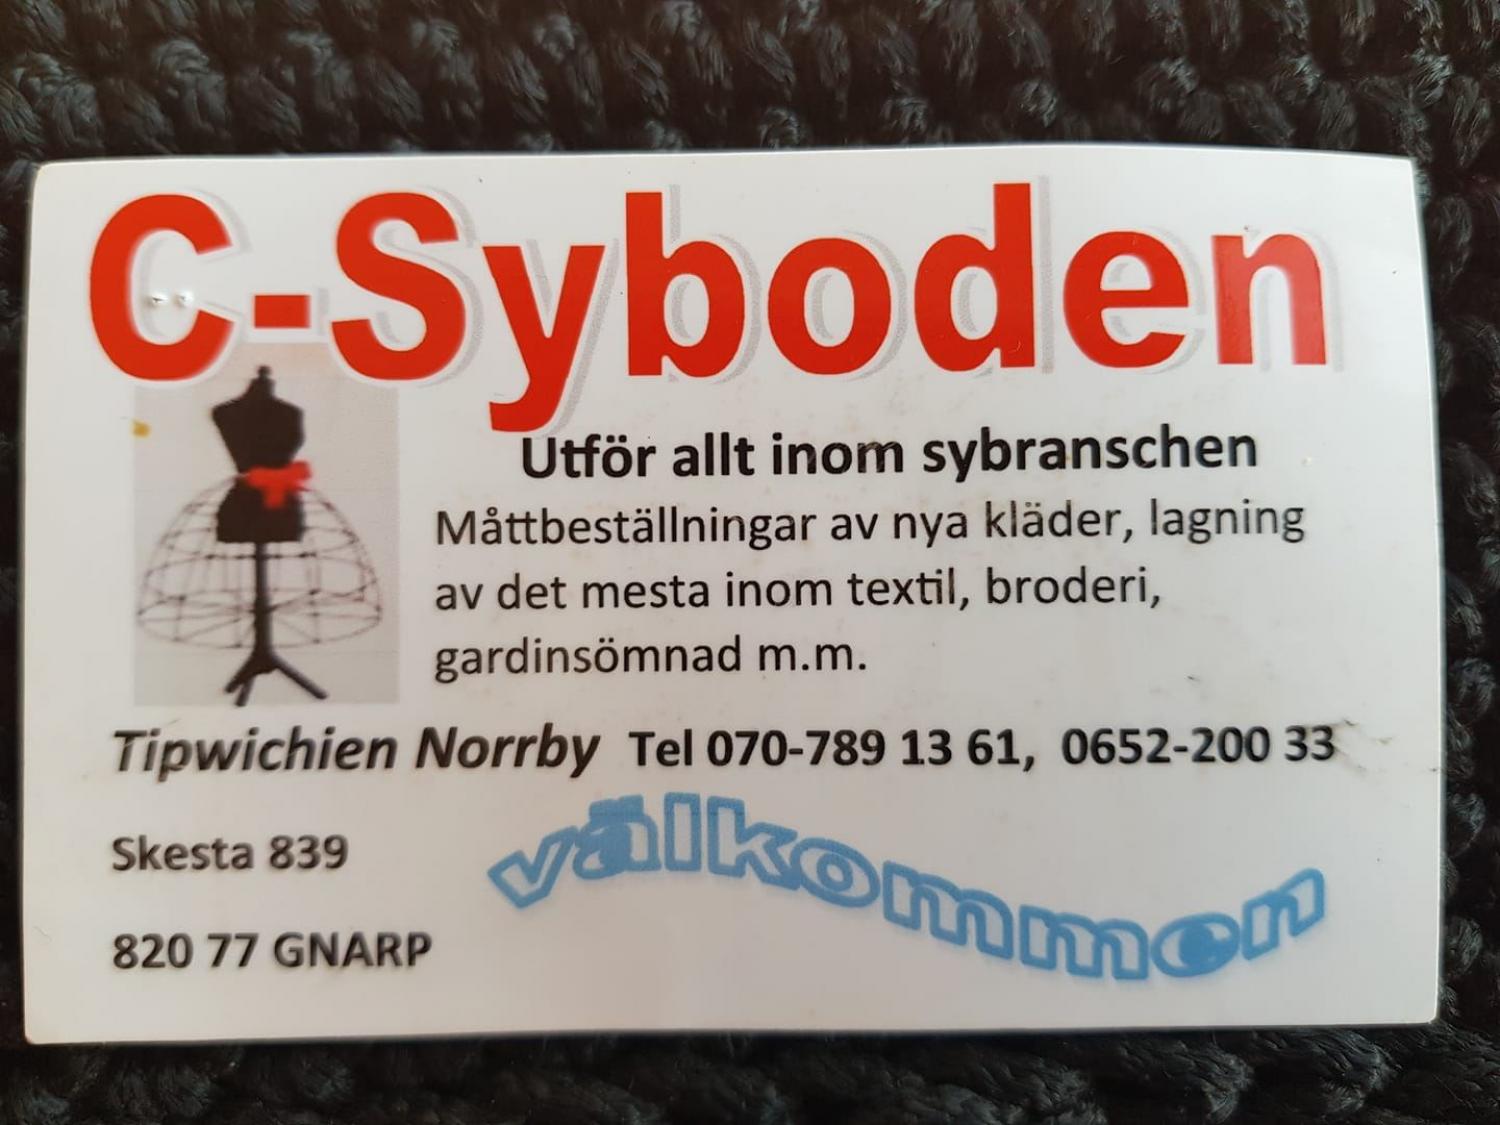 C-Syboden